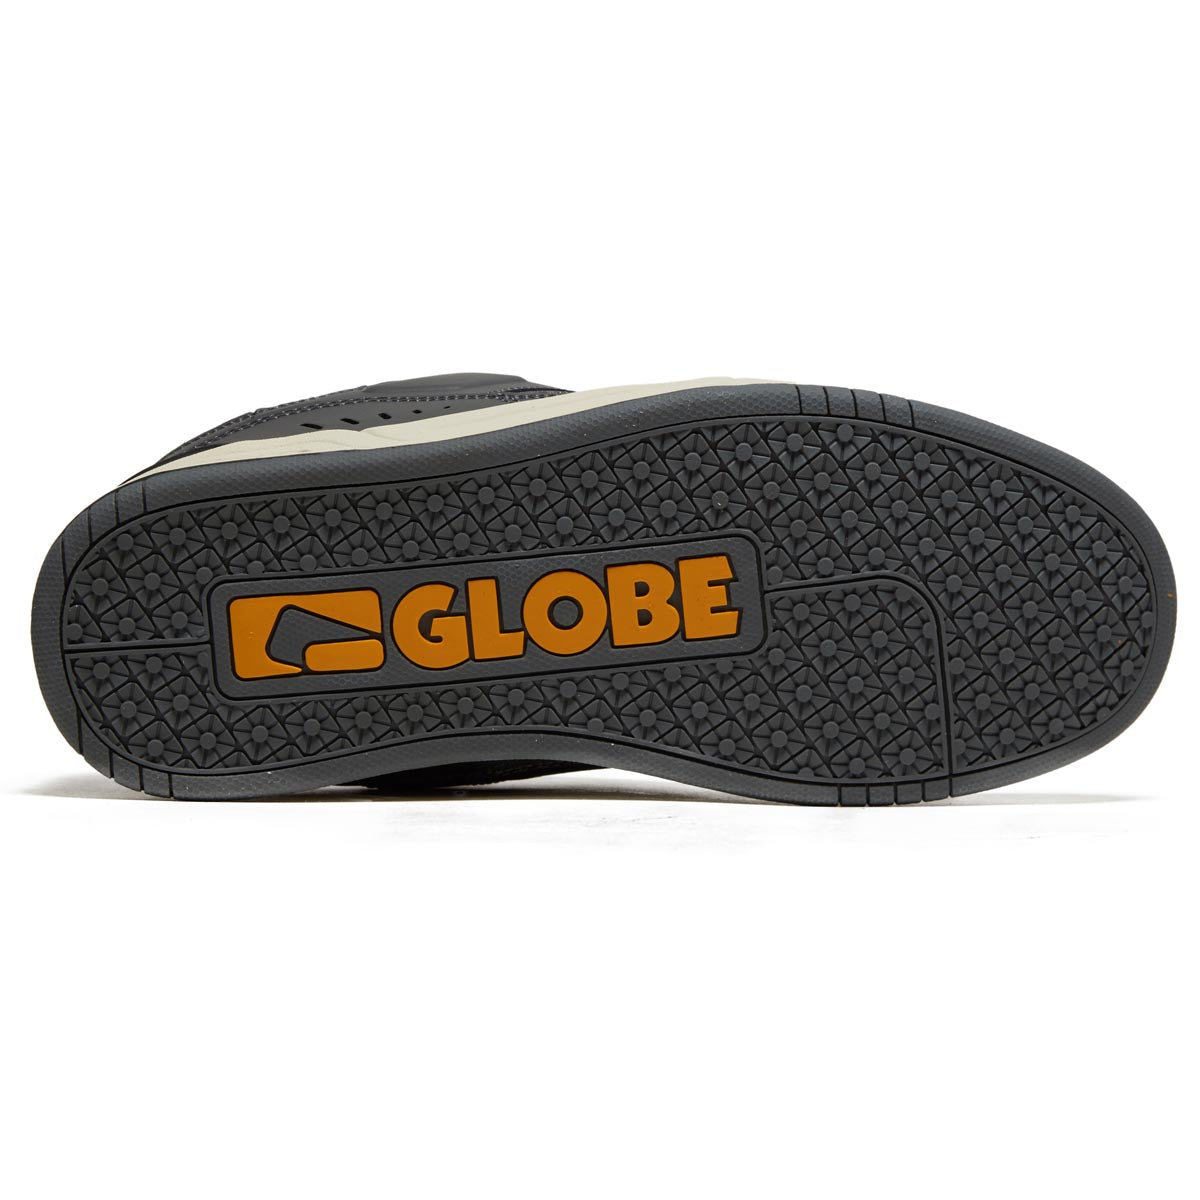 Globe Fusion Shoes - Lead/Antique image 4